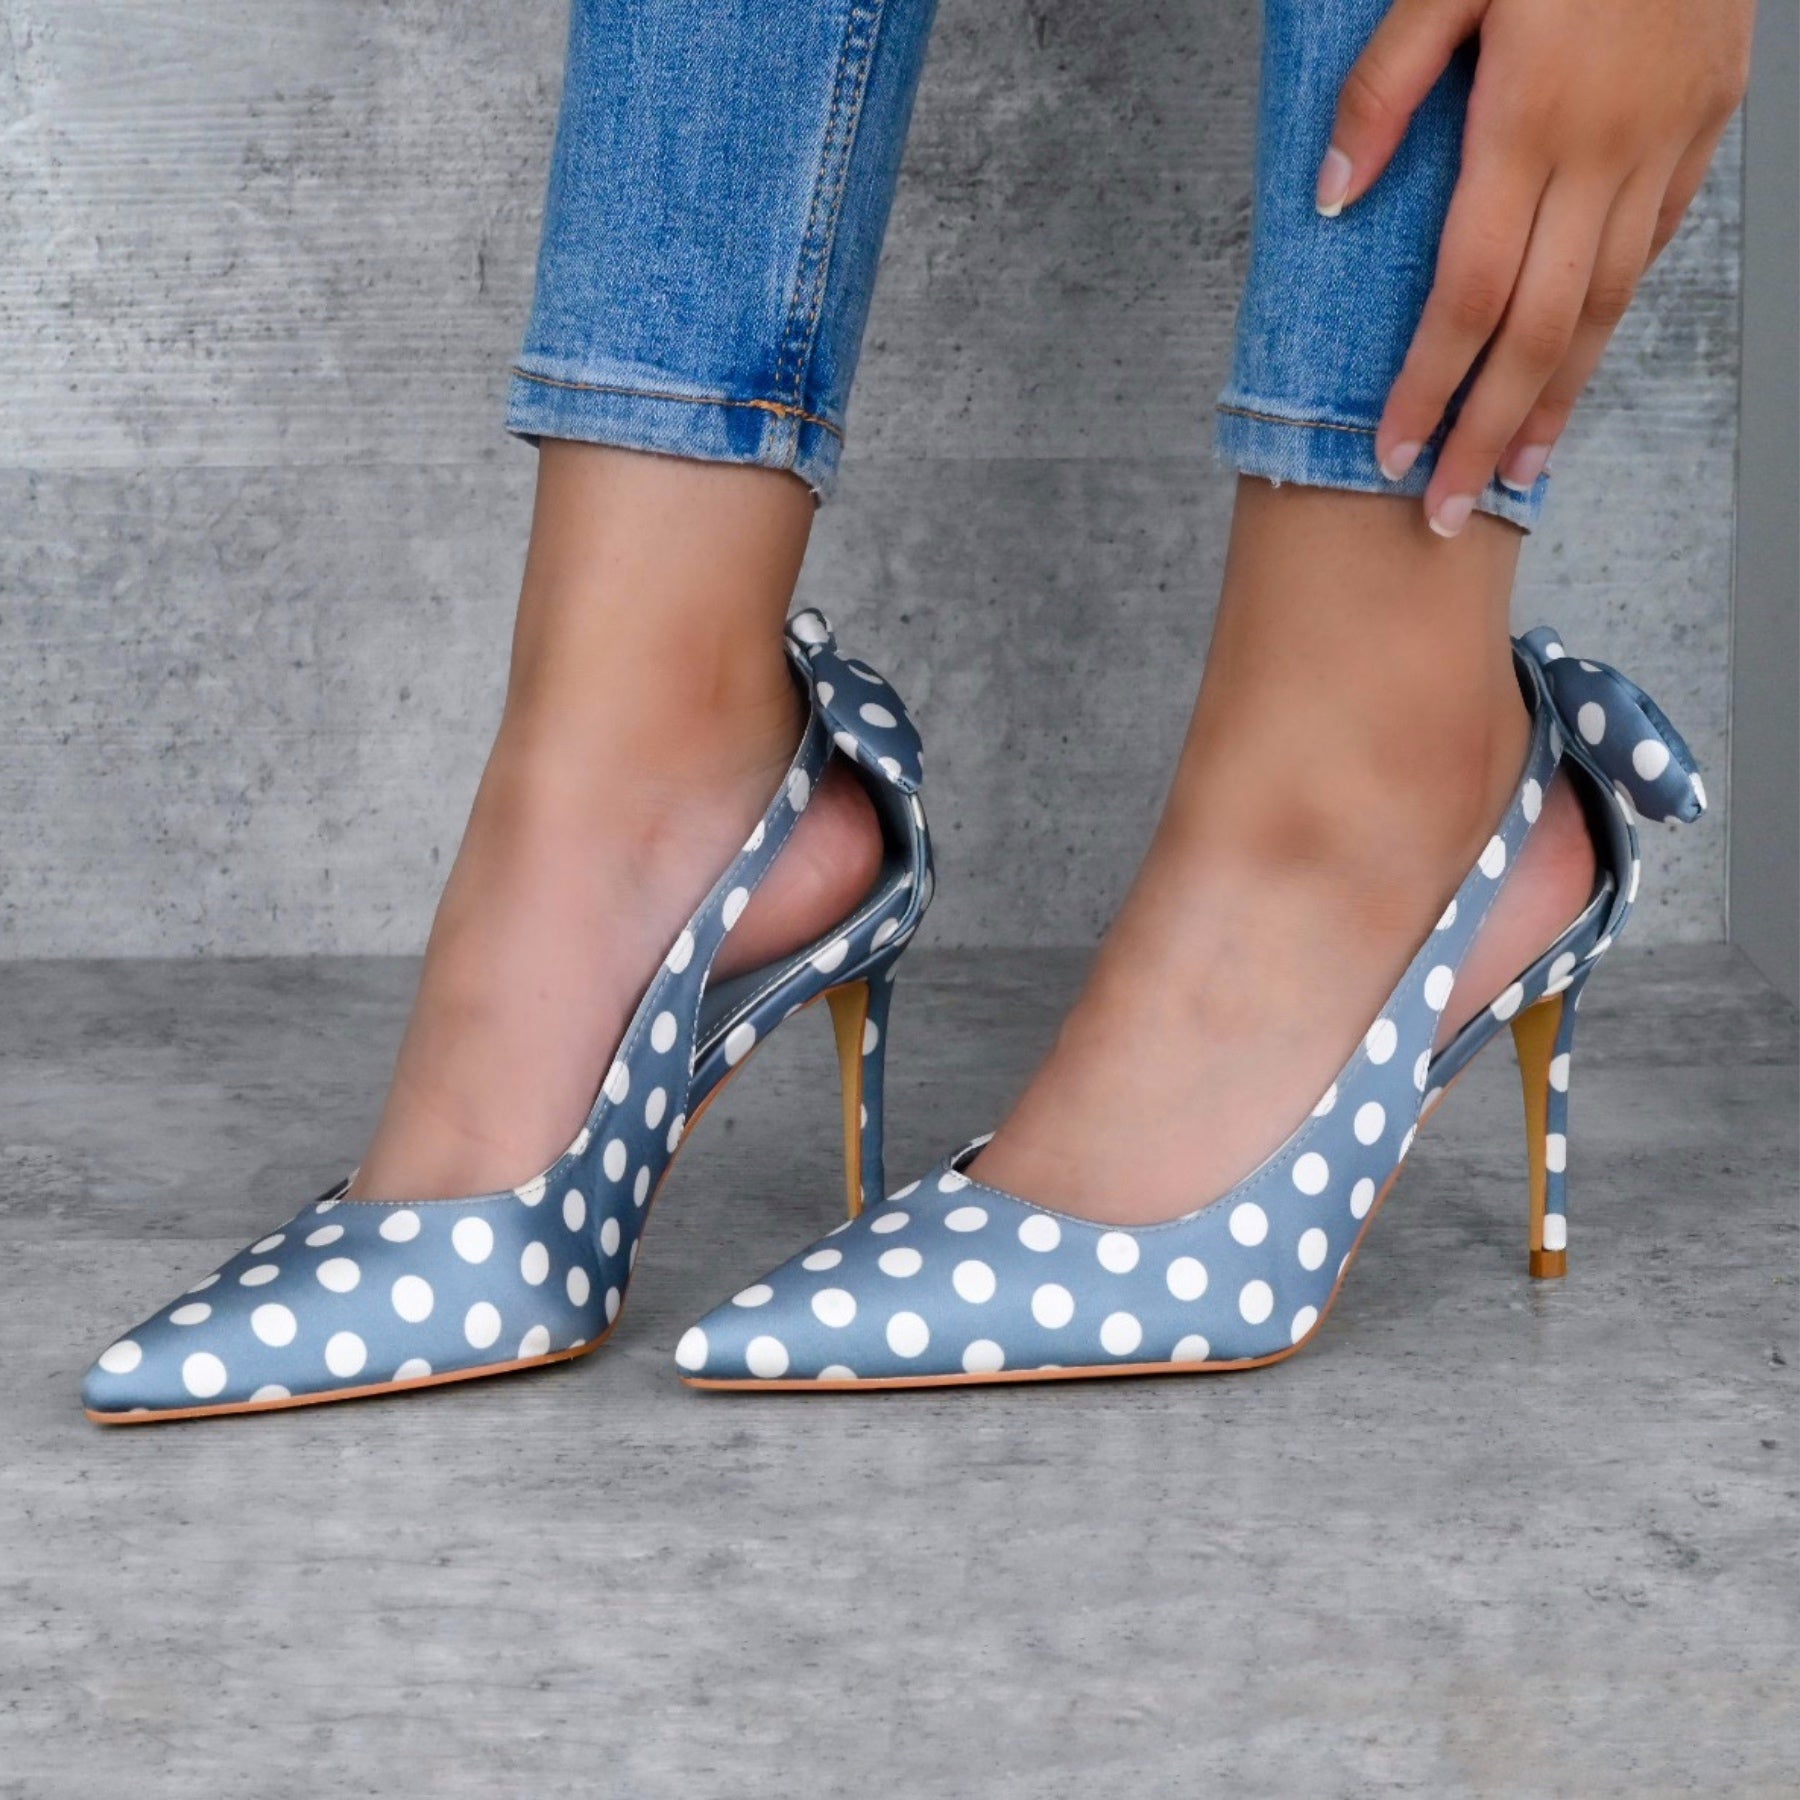 Kenly 9cm heel polka dot with a back bow light blue